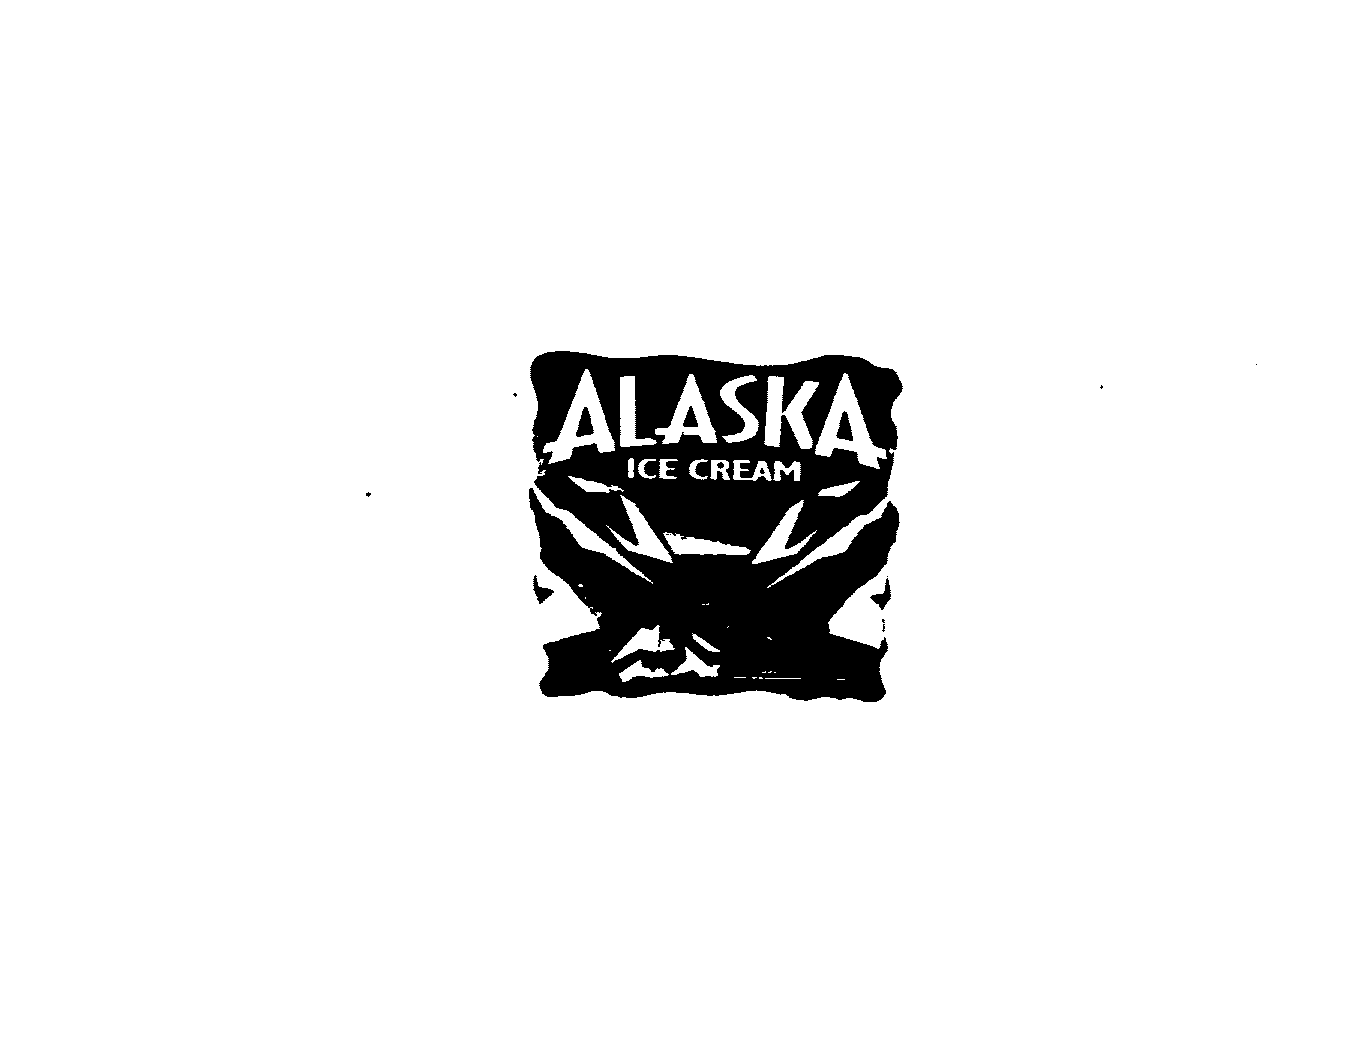  ALASKA ICE CREAM